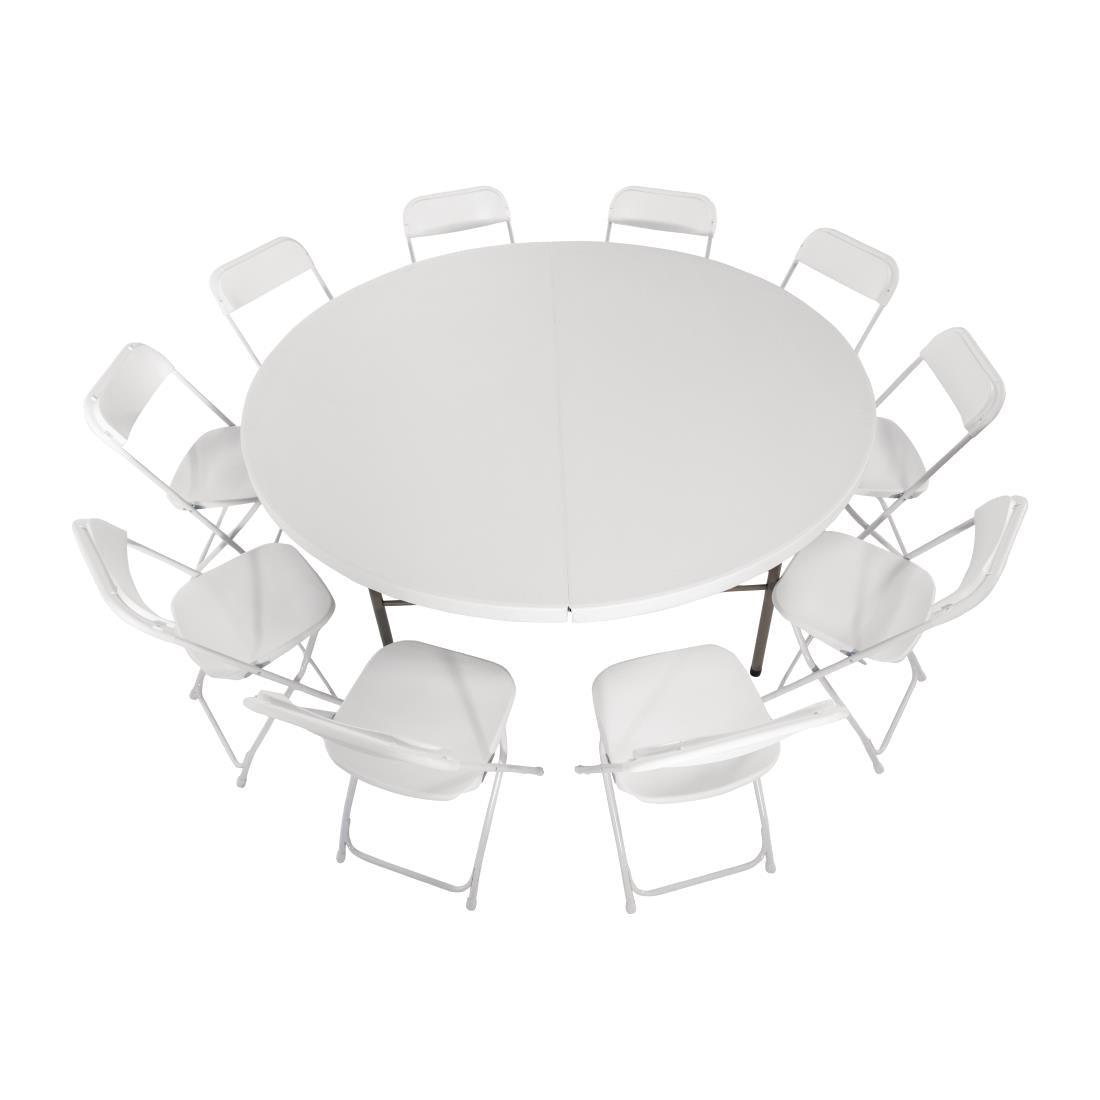 Bolero HC270 EDLP - Bolero Centre Folding Table Round White Top - 180cm - HospoStore